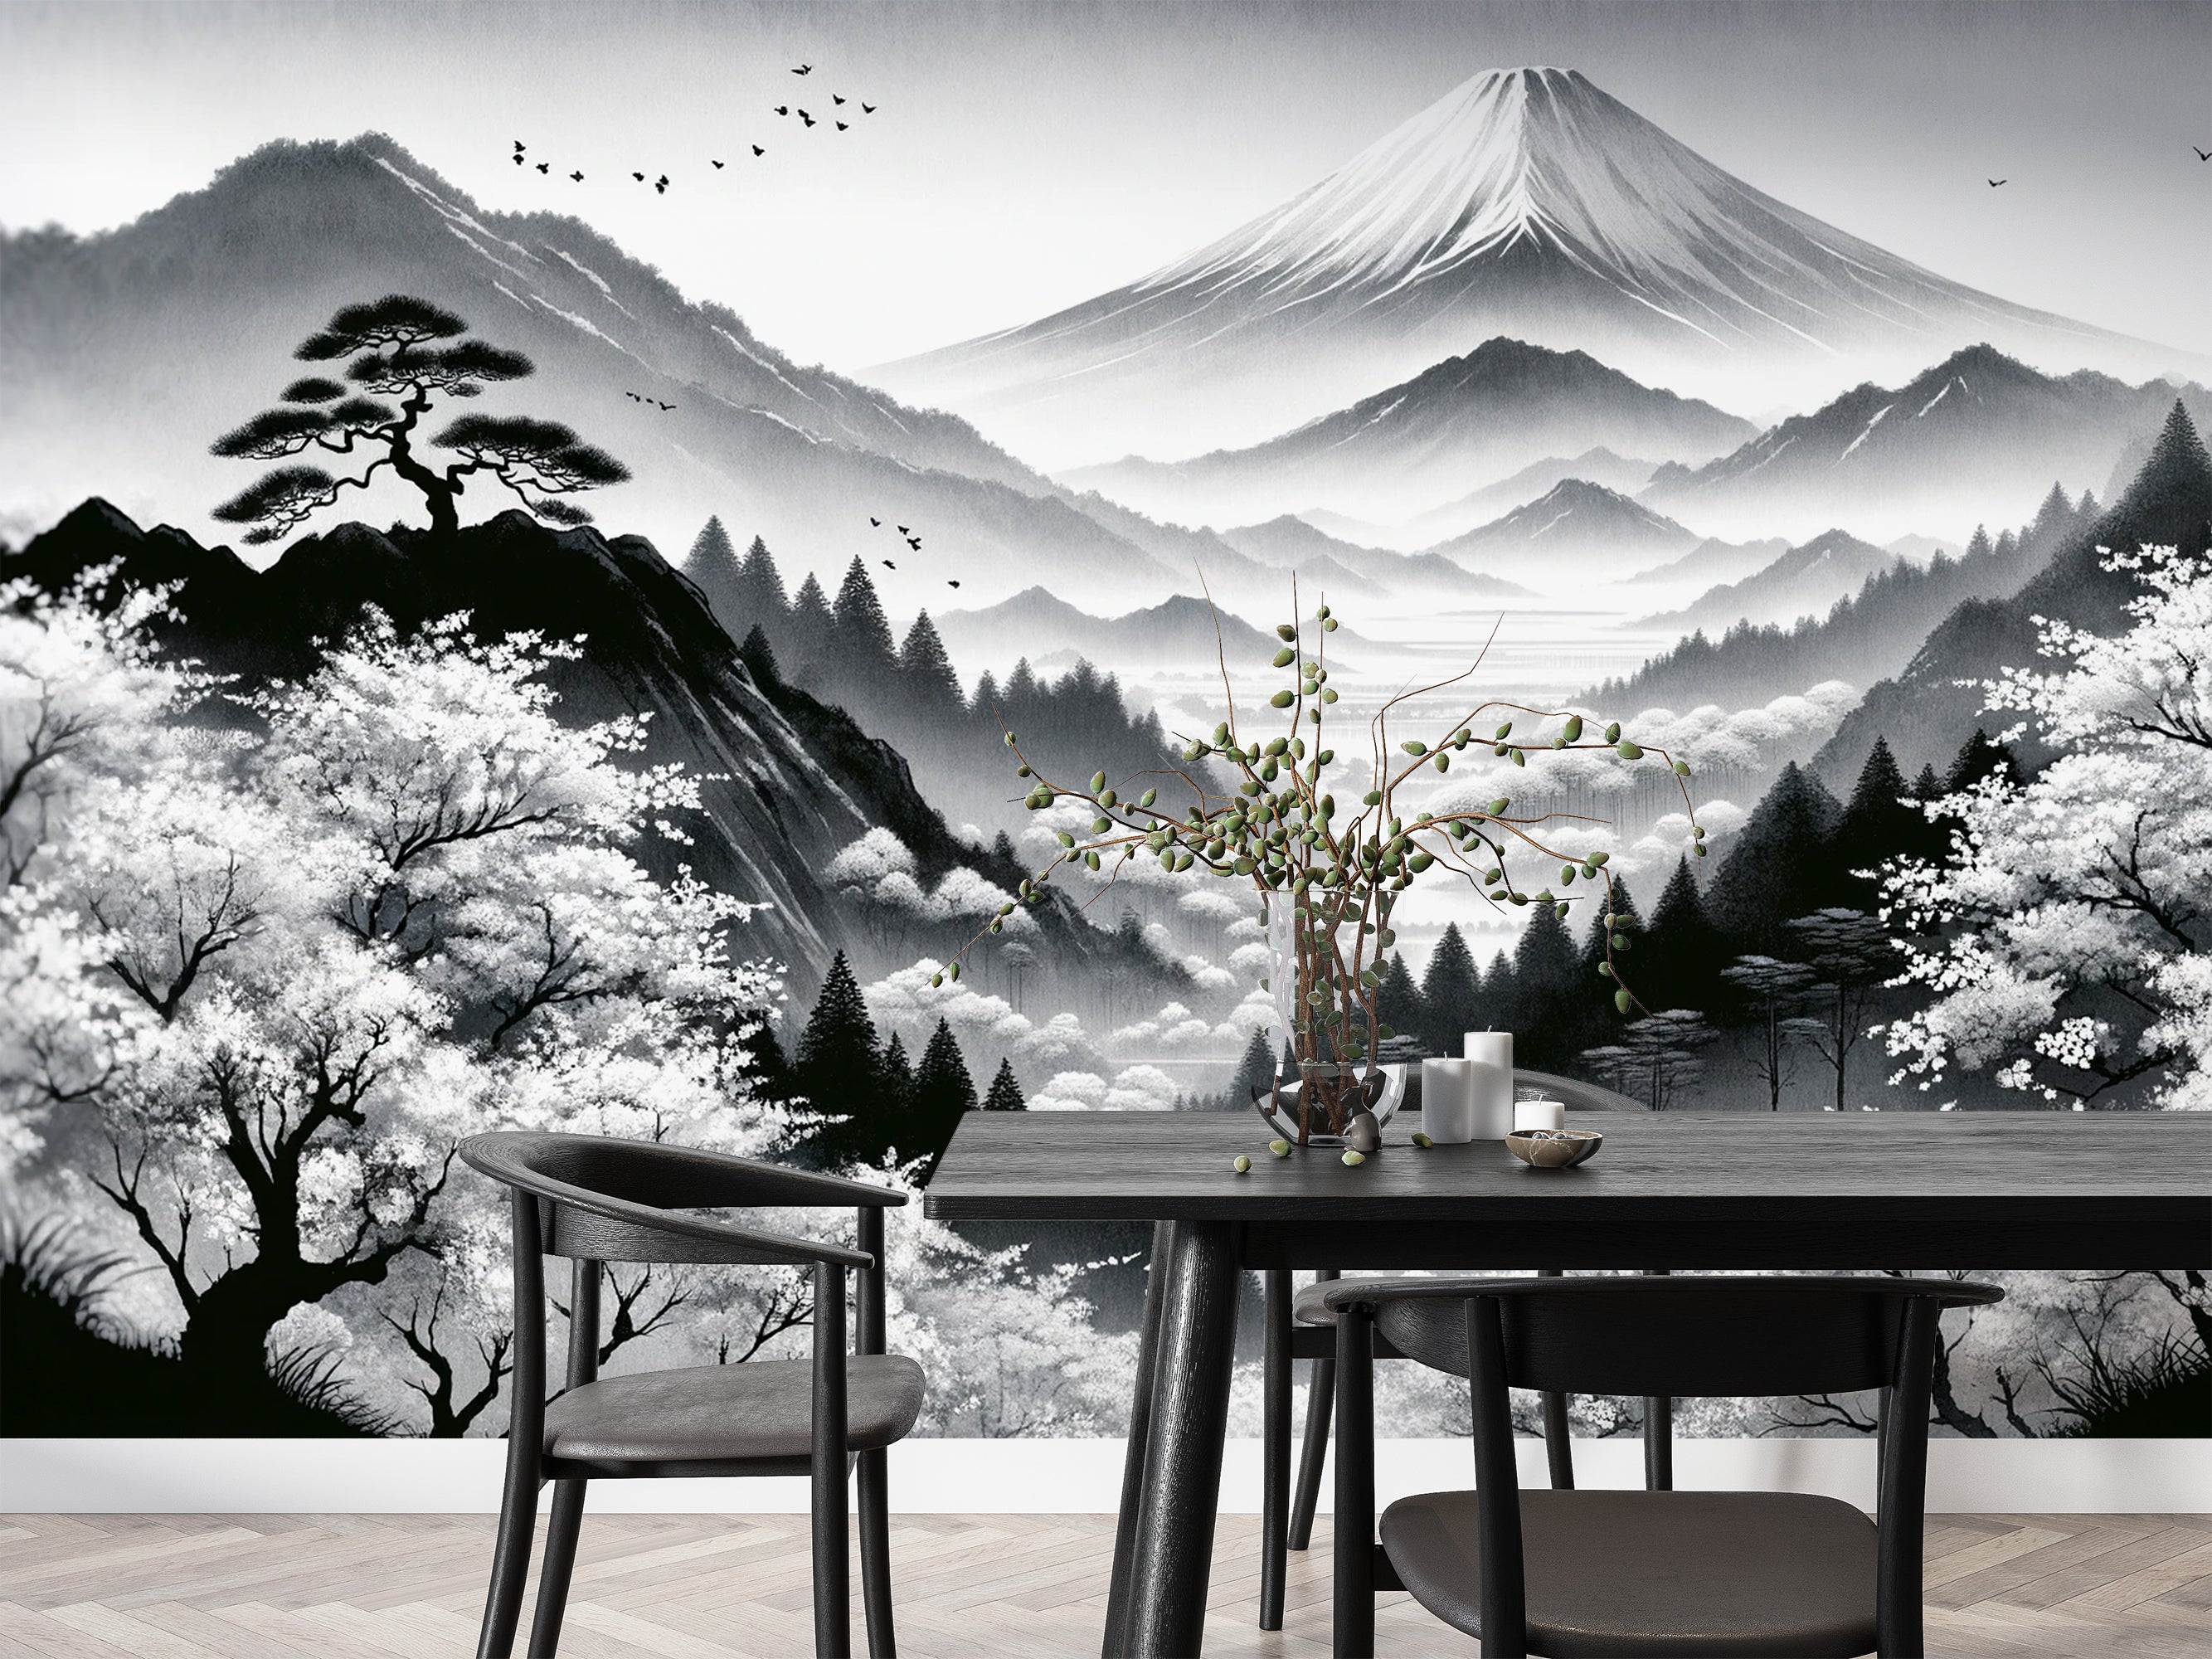 Asian contemplation - Mount Fuji